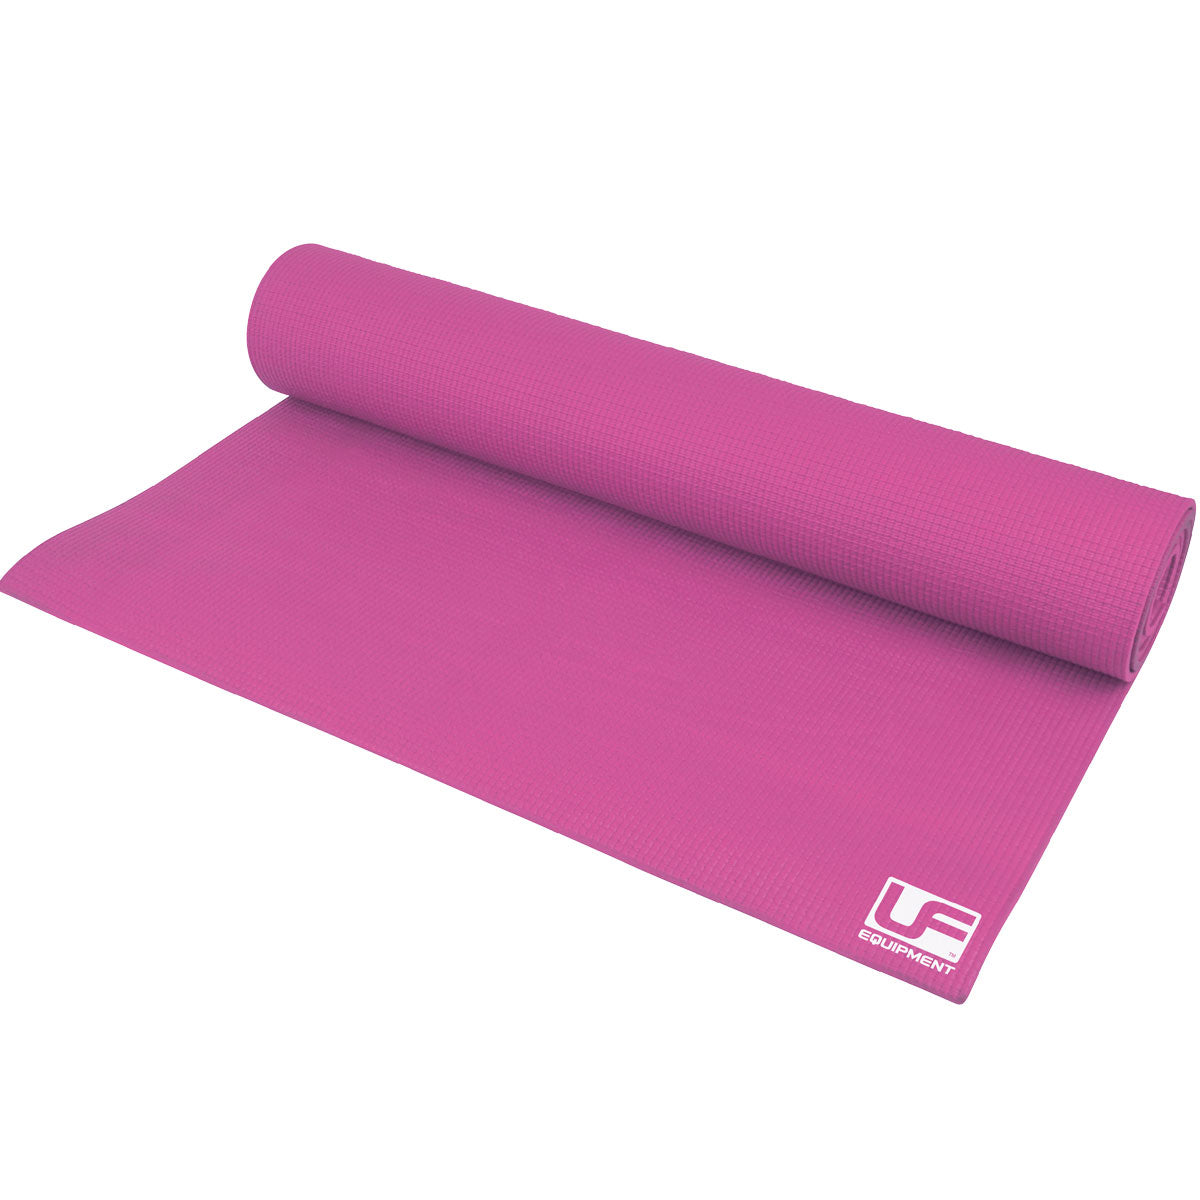 UFE Yoga Mat - Pink